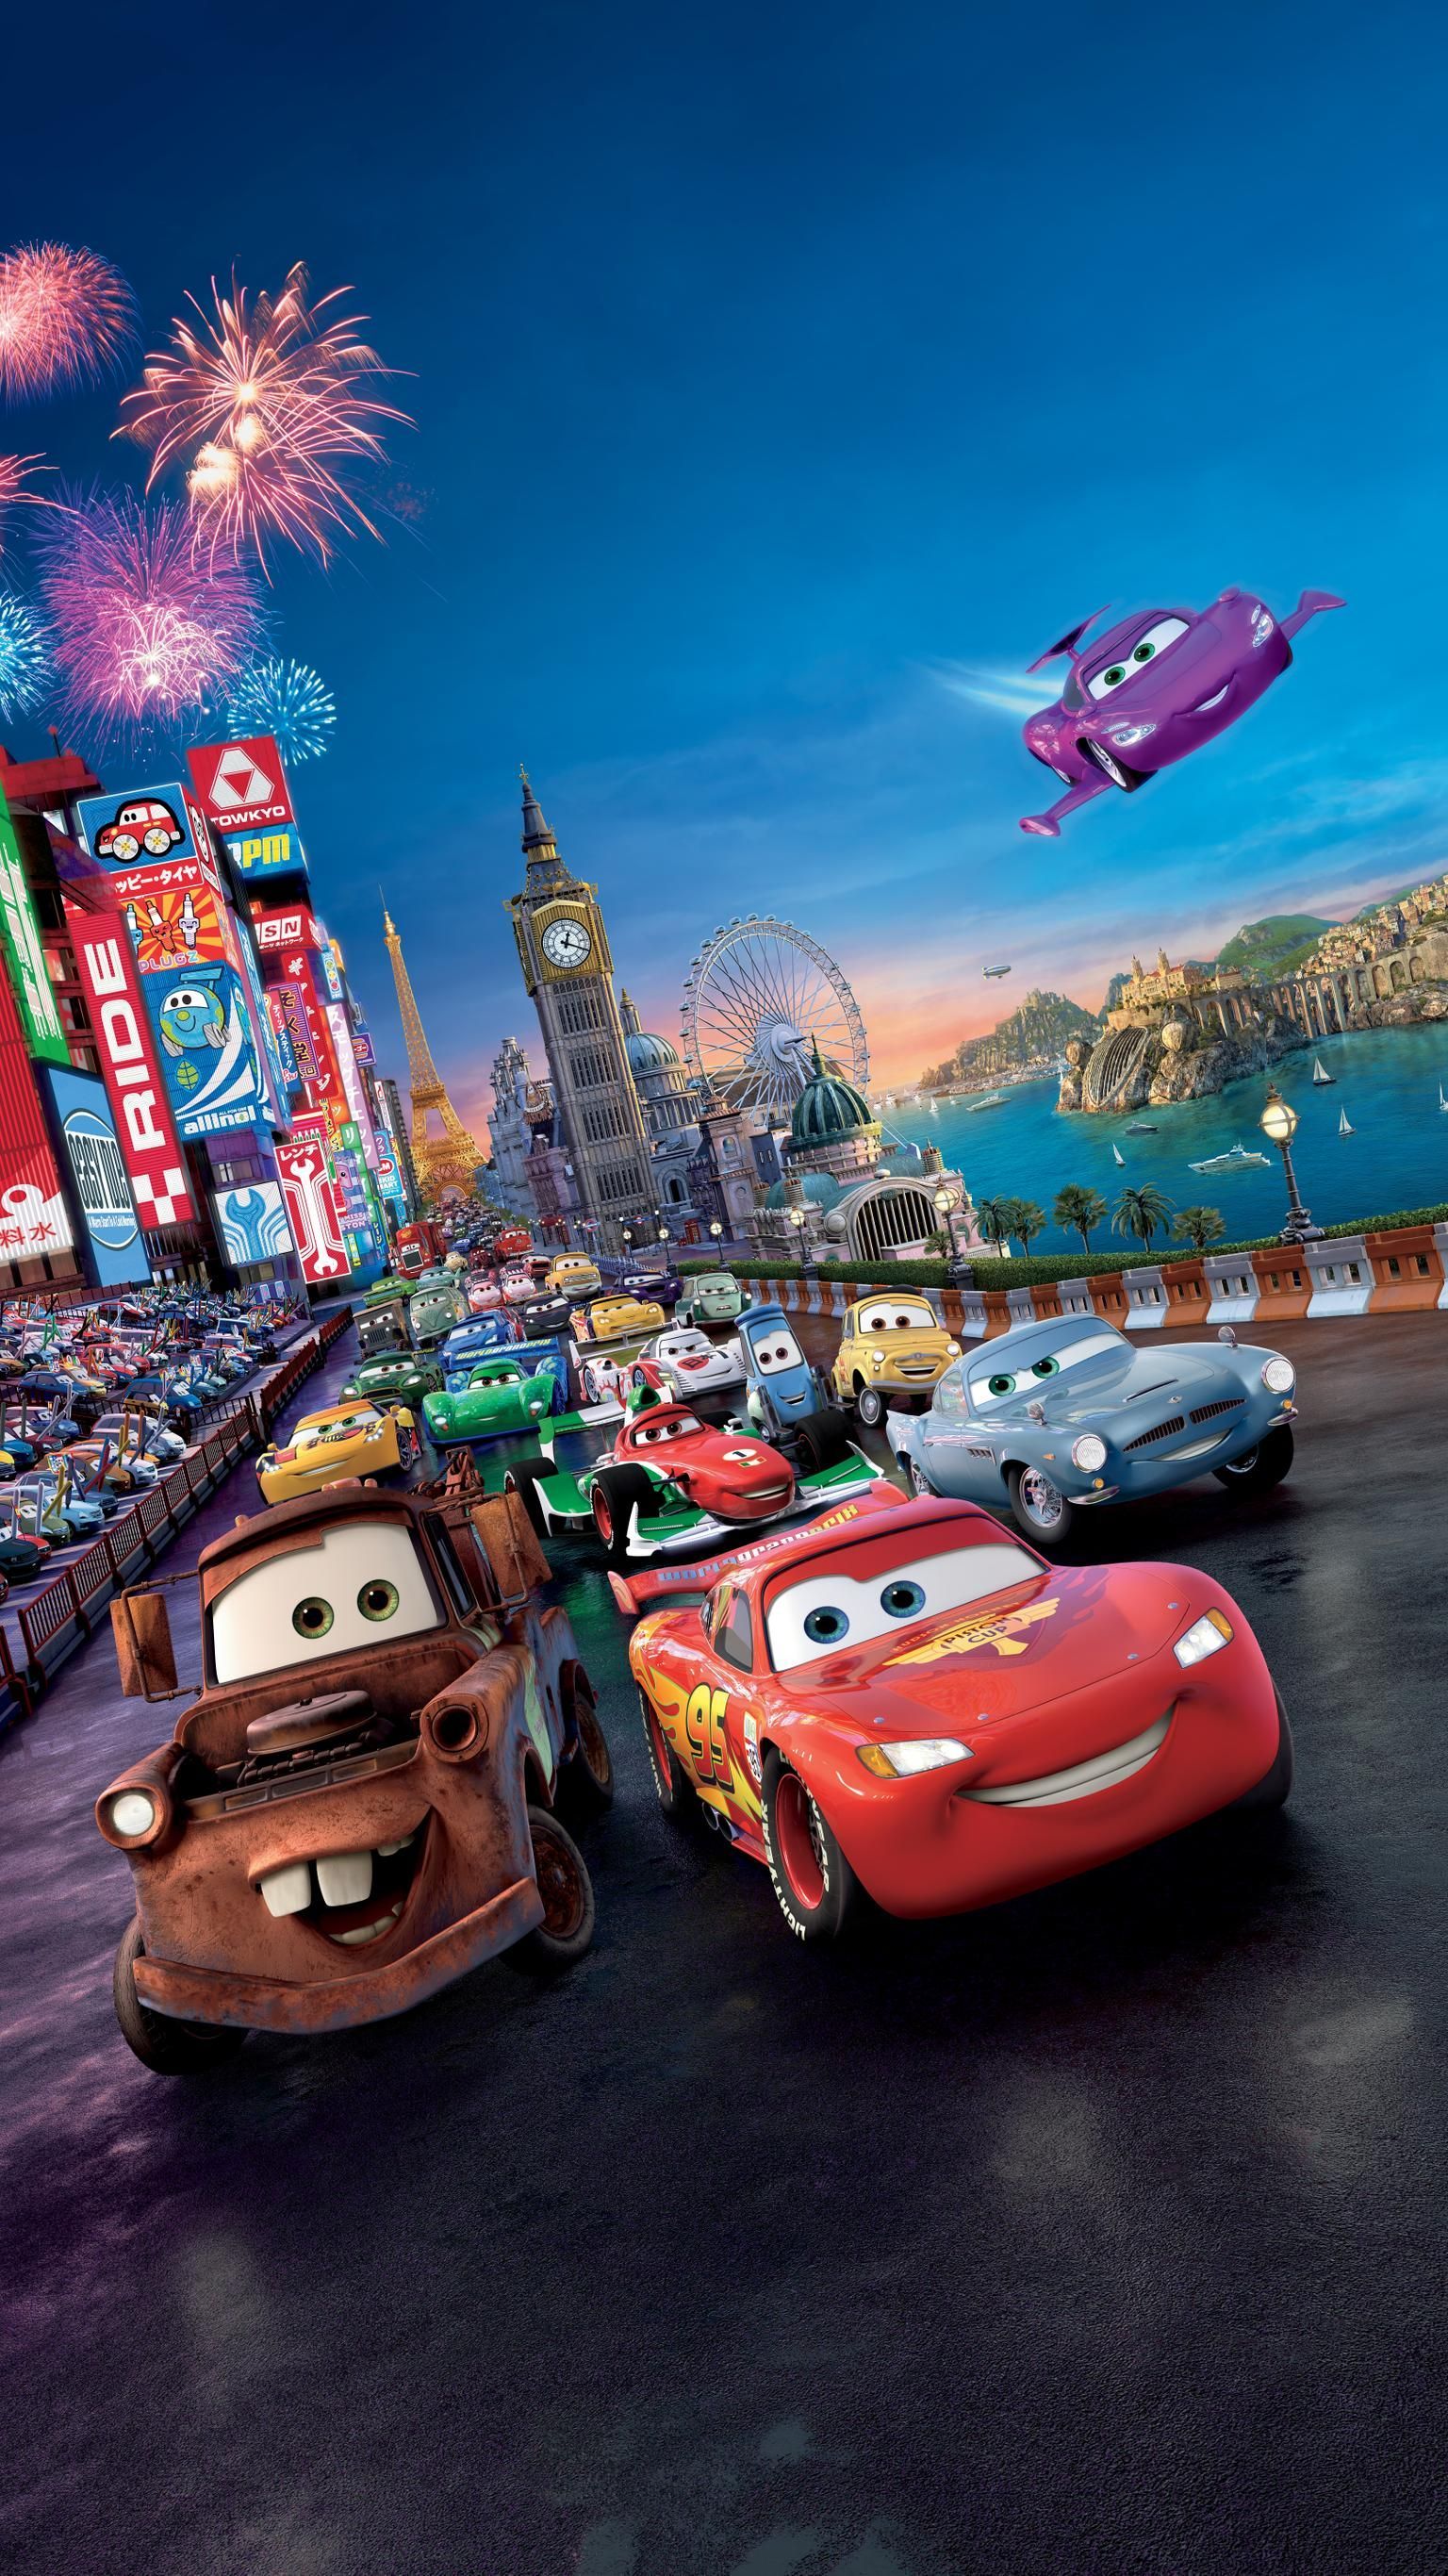 Cars 2 (2011) Phone Wallpaper. Moviemania. Disney cars wallpaper, Disney wallpaper, Disney posters